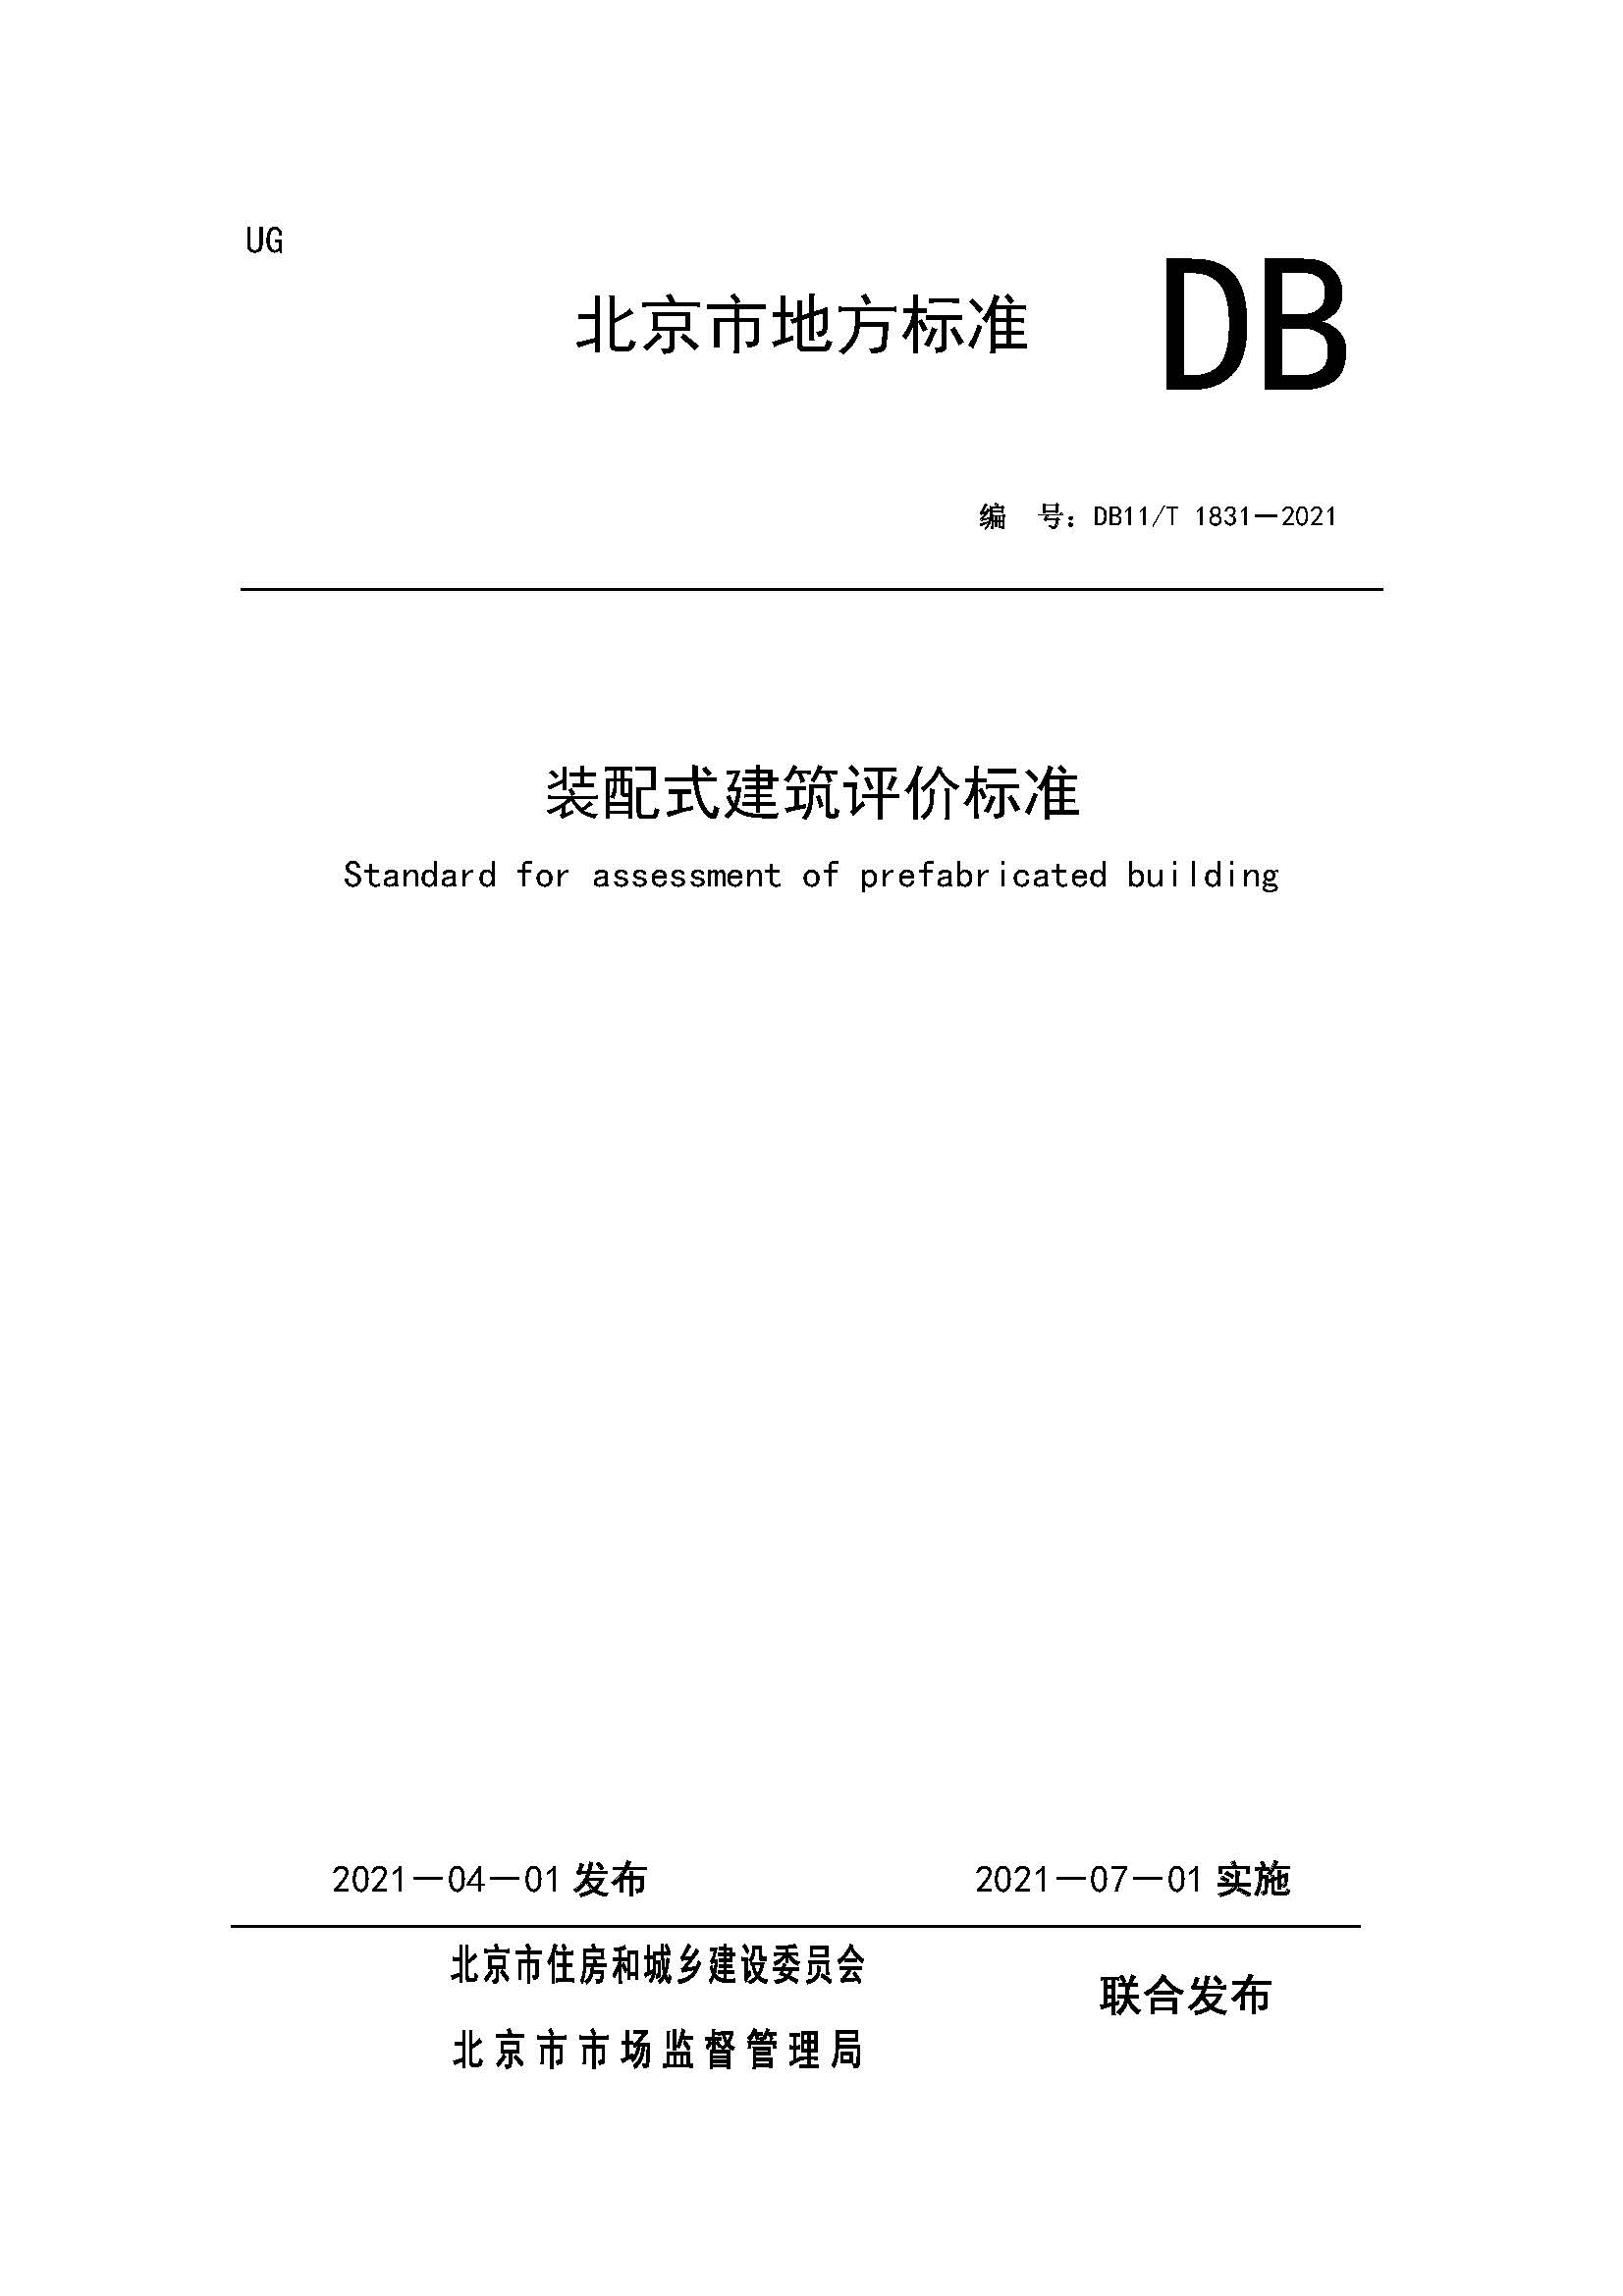 DB11/T 1831-2021 装配式建筑评价标准